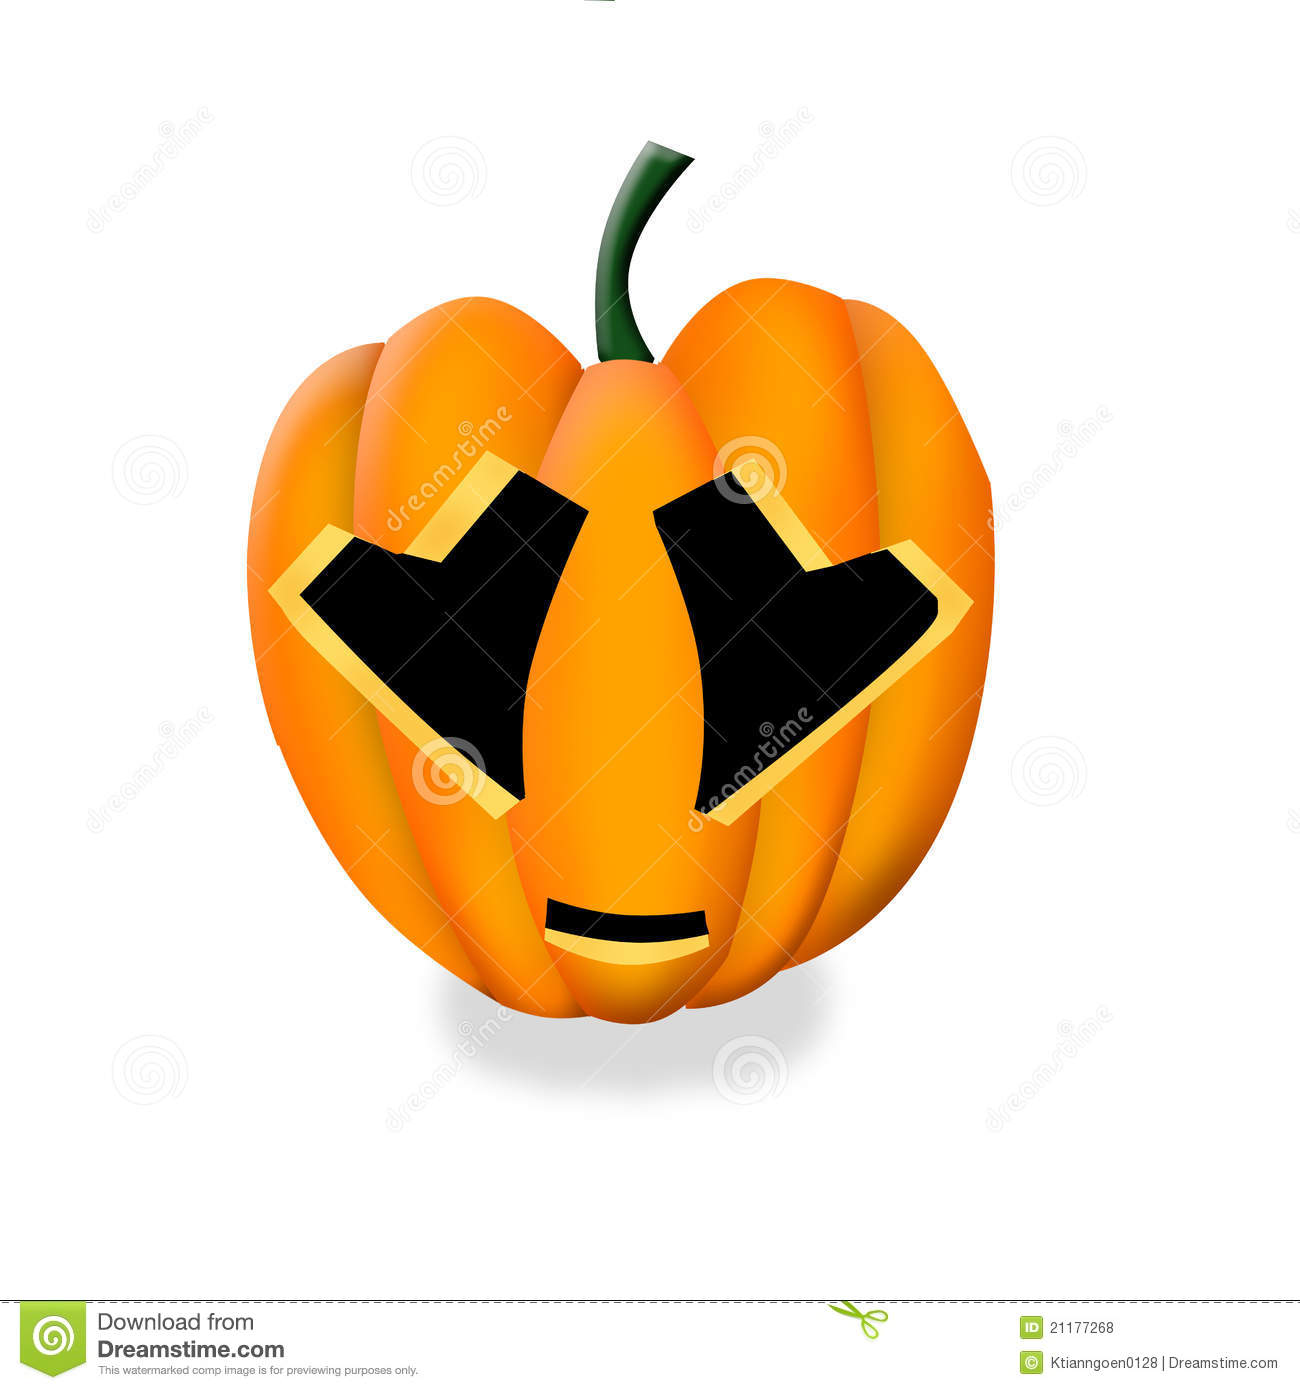 Halloween Pumpkin Clipart  Royalty Free Stock Photos   Image  21177268